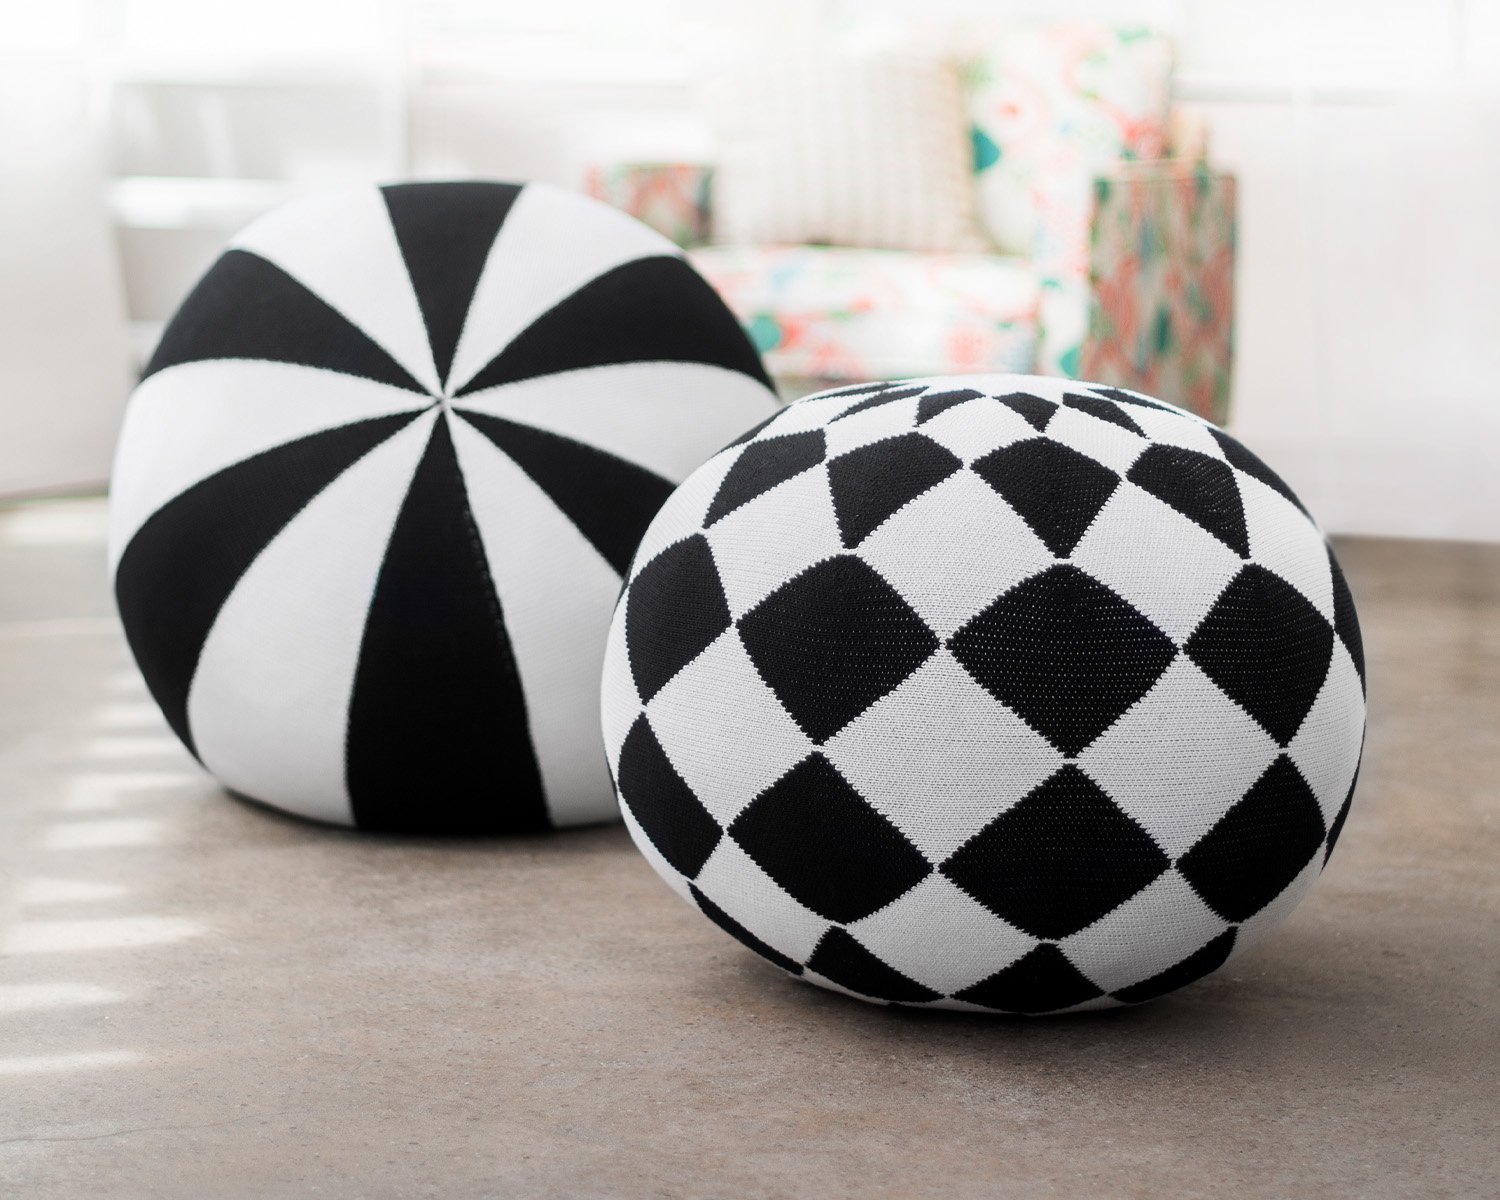 Camilla Lundsten WEB-D Chrochet balls livingroom.jpg